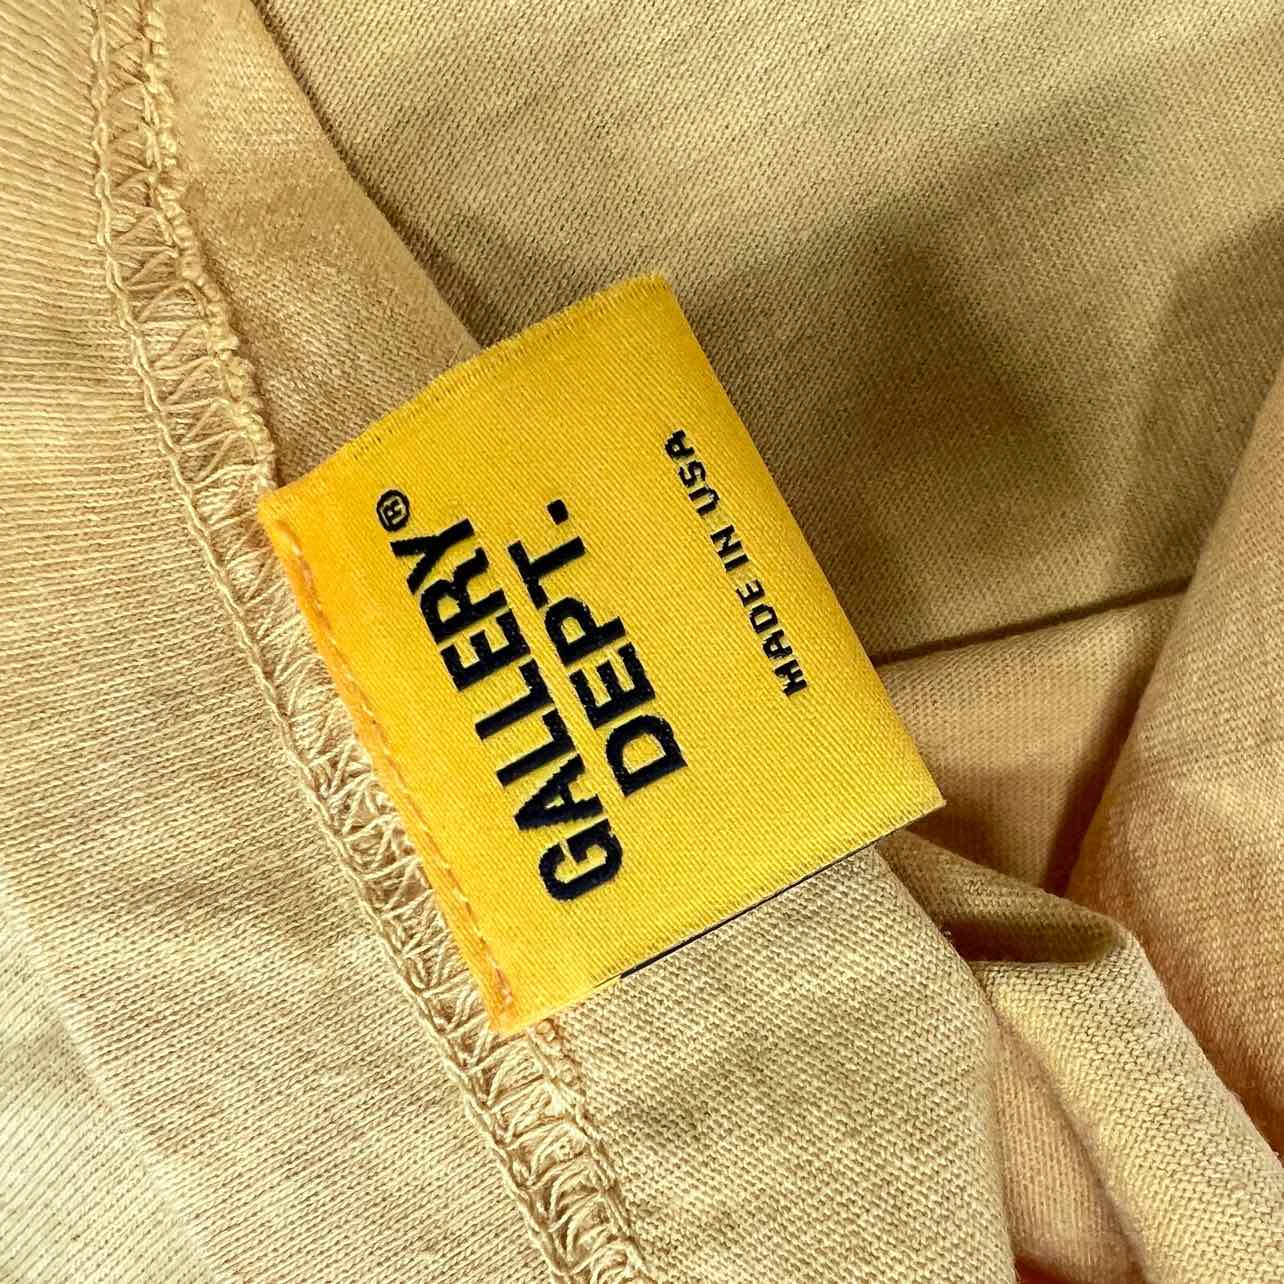 Gallery DEPT. T-Shirt "SOUVENIR" Yellow New Size M